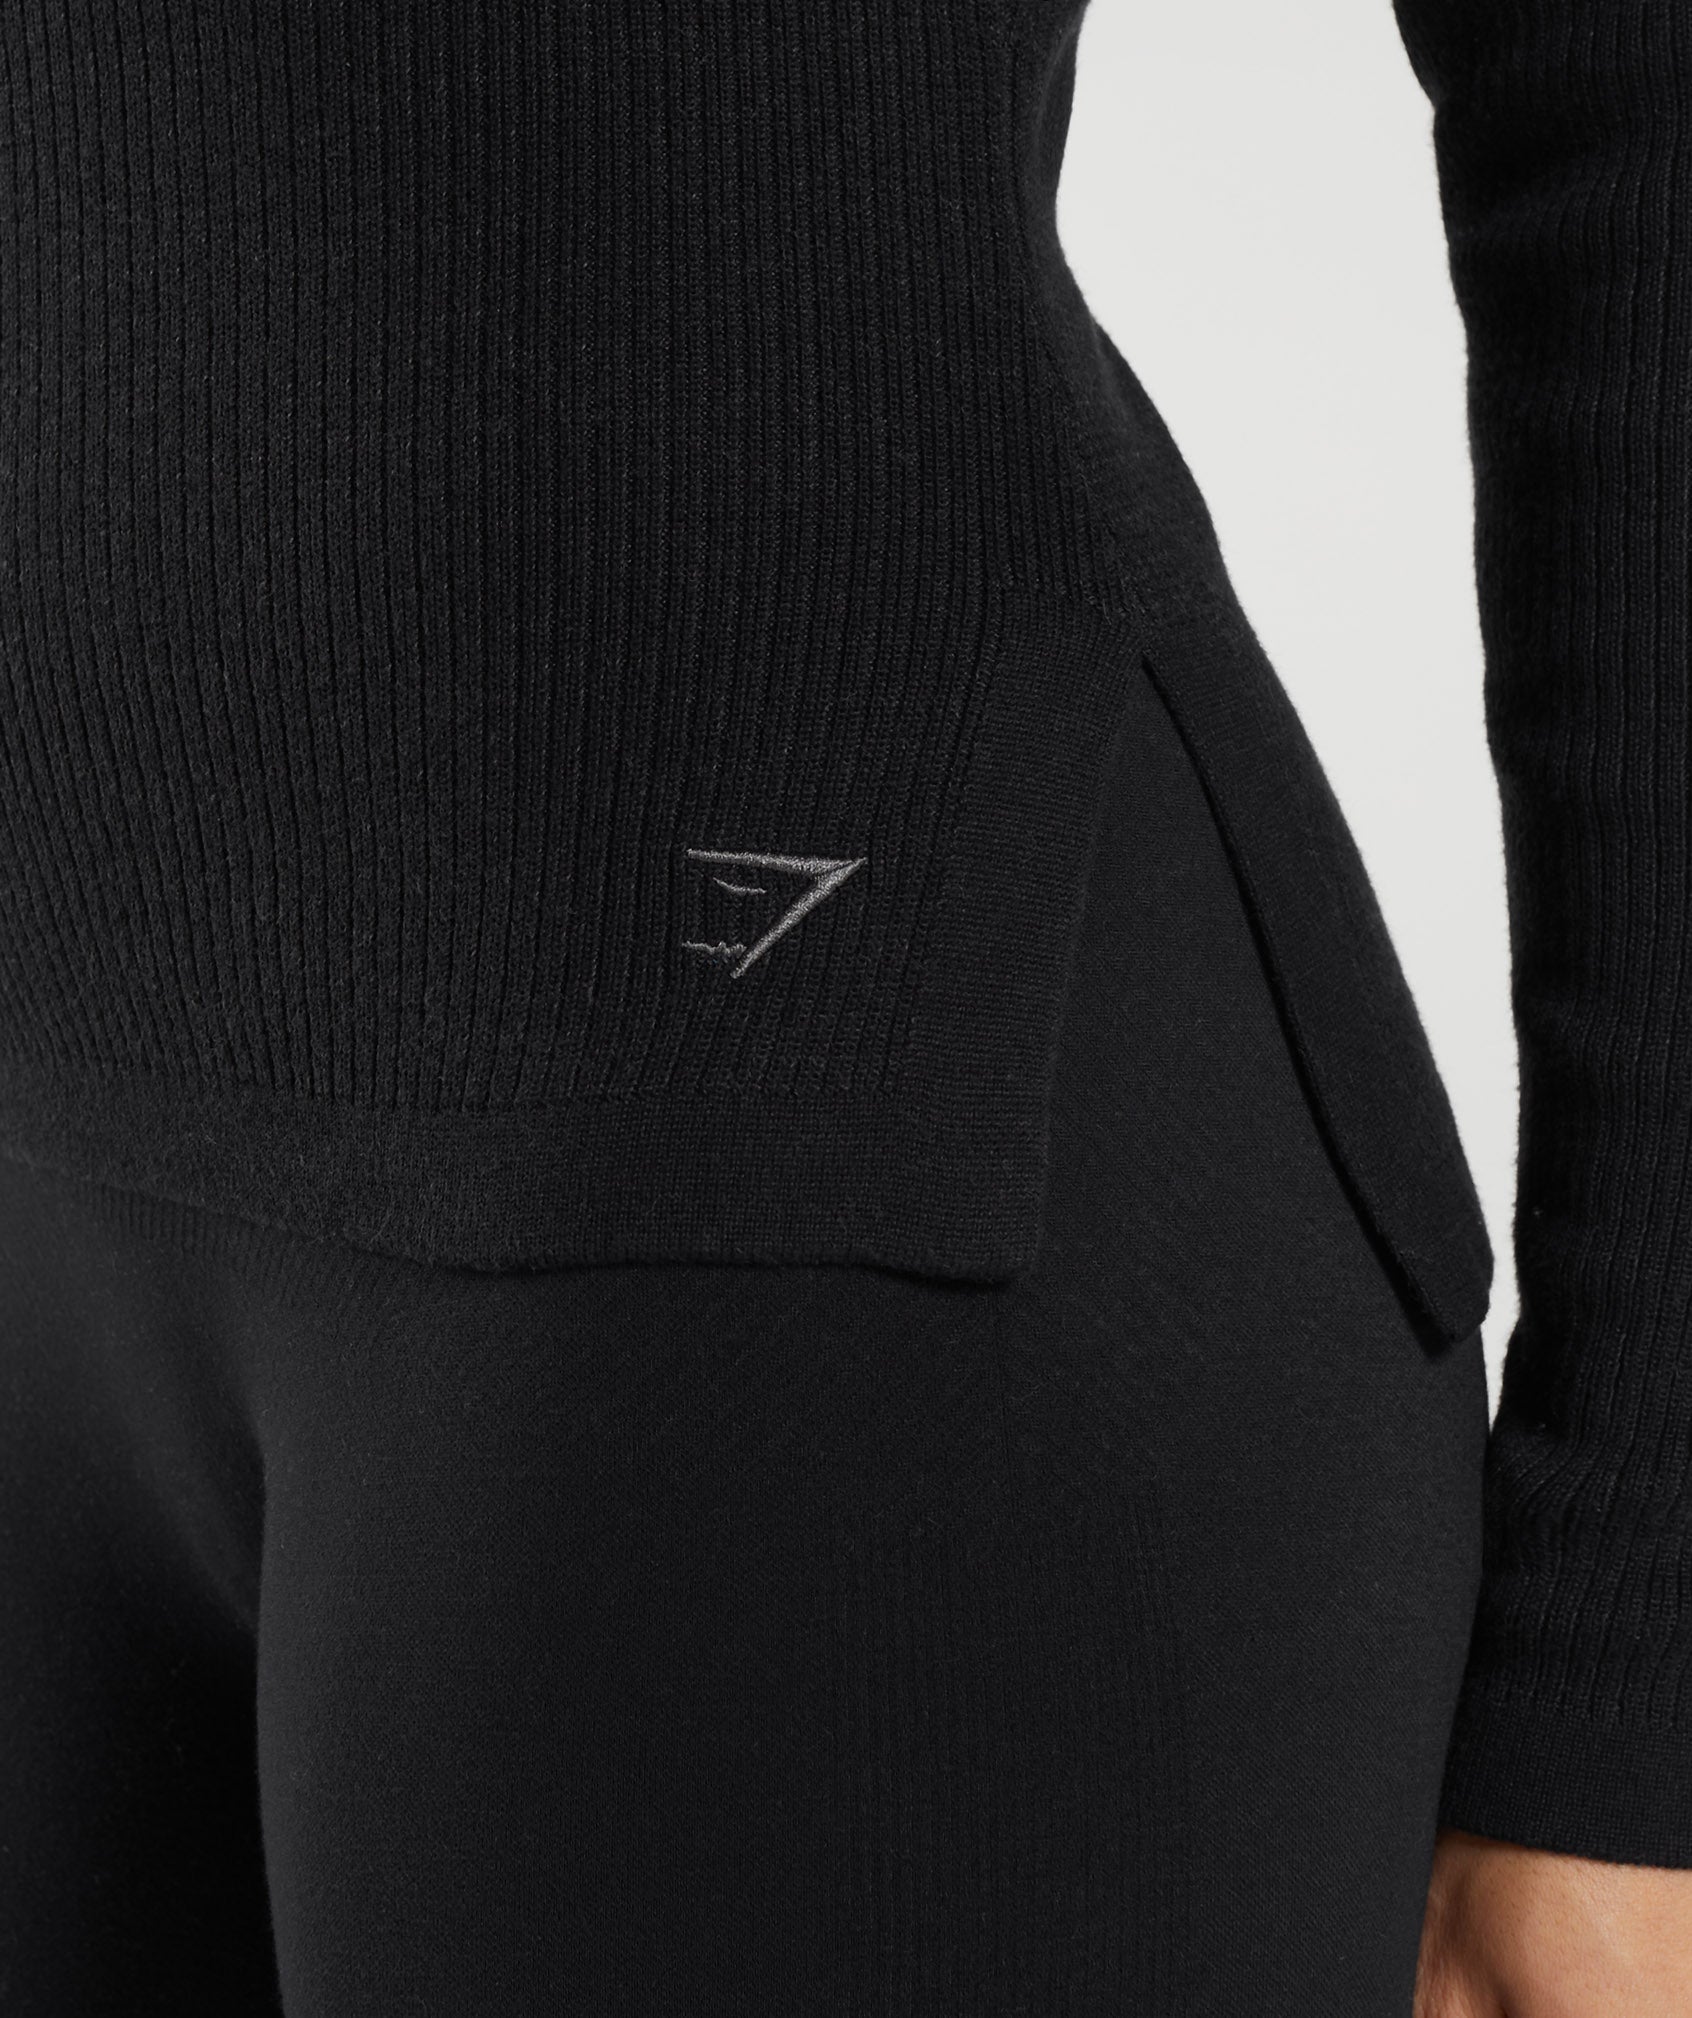 Pause Knitwear Long Sleeve Top in Black/Onyx Grey - view 6